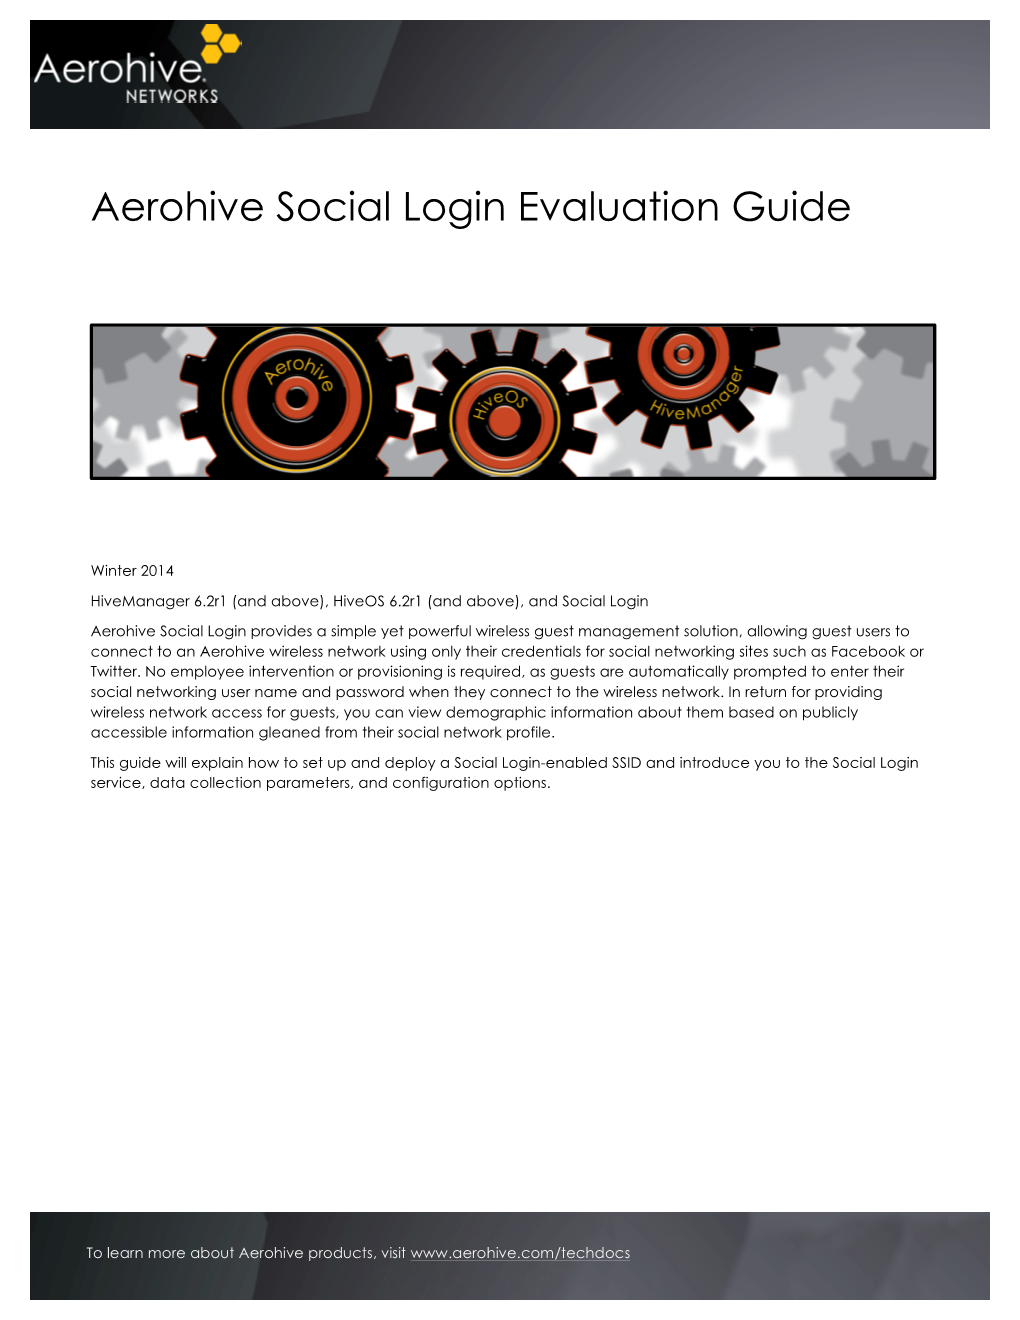 Aerohive Social Login Evaluation Guide